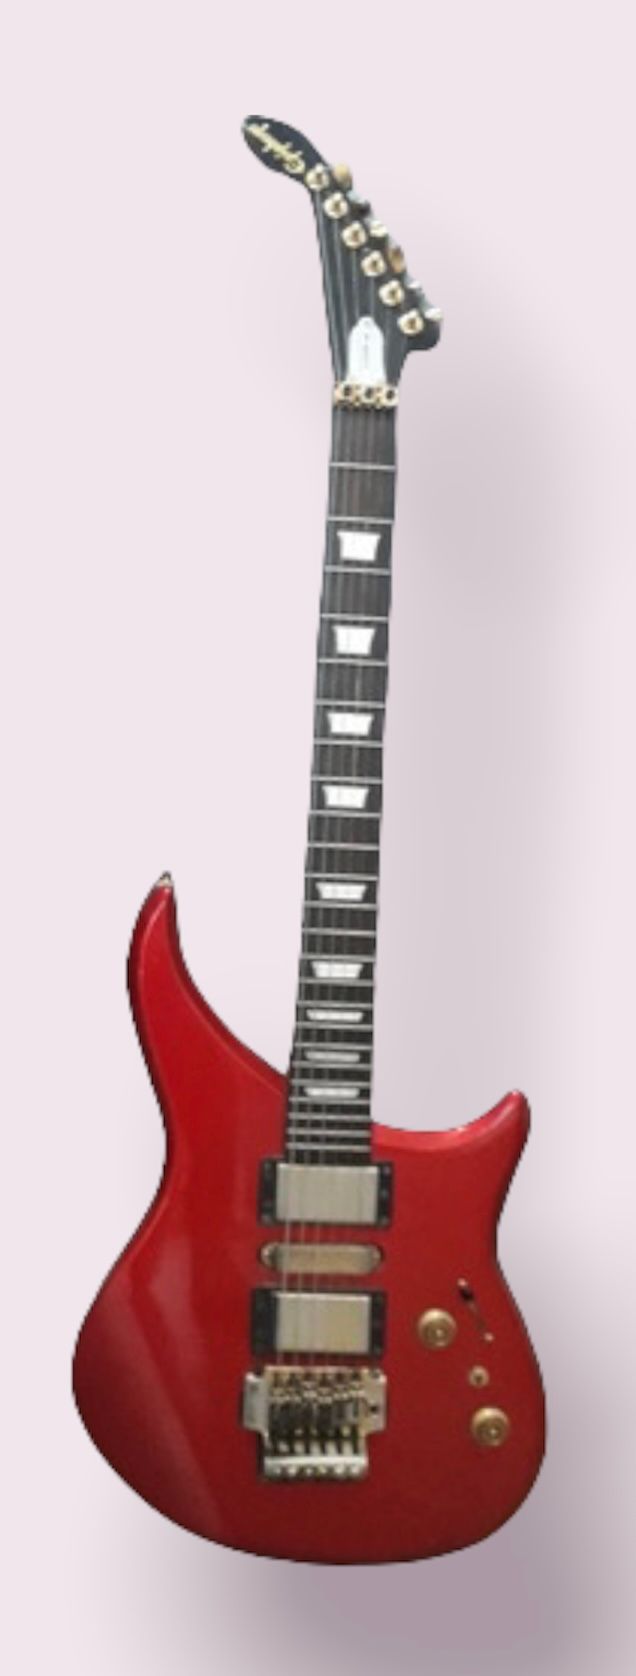 Null * 电吉他，EPIPHONE，Stratocaster型

红色，编号S2030011

有一个黑色的封面